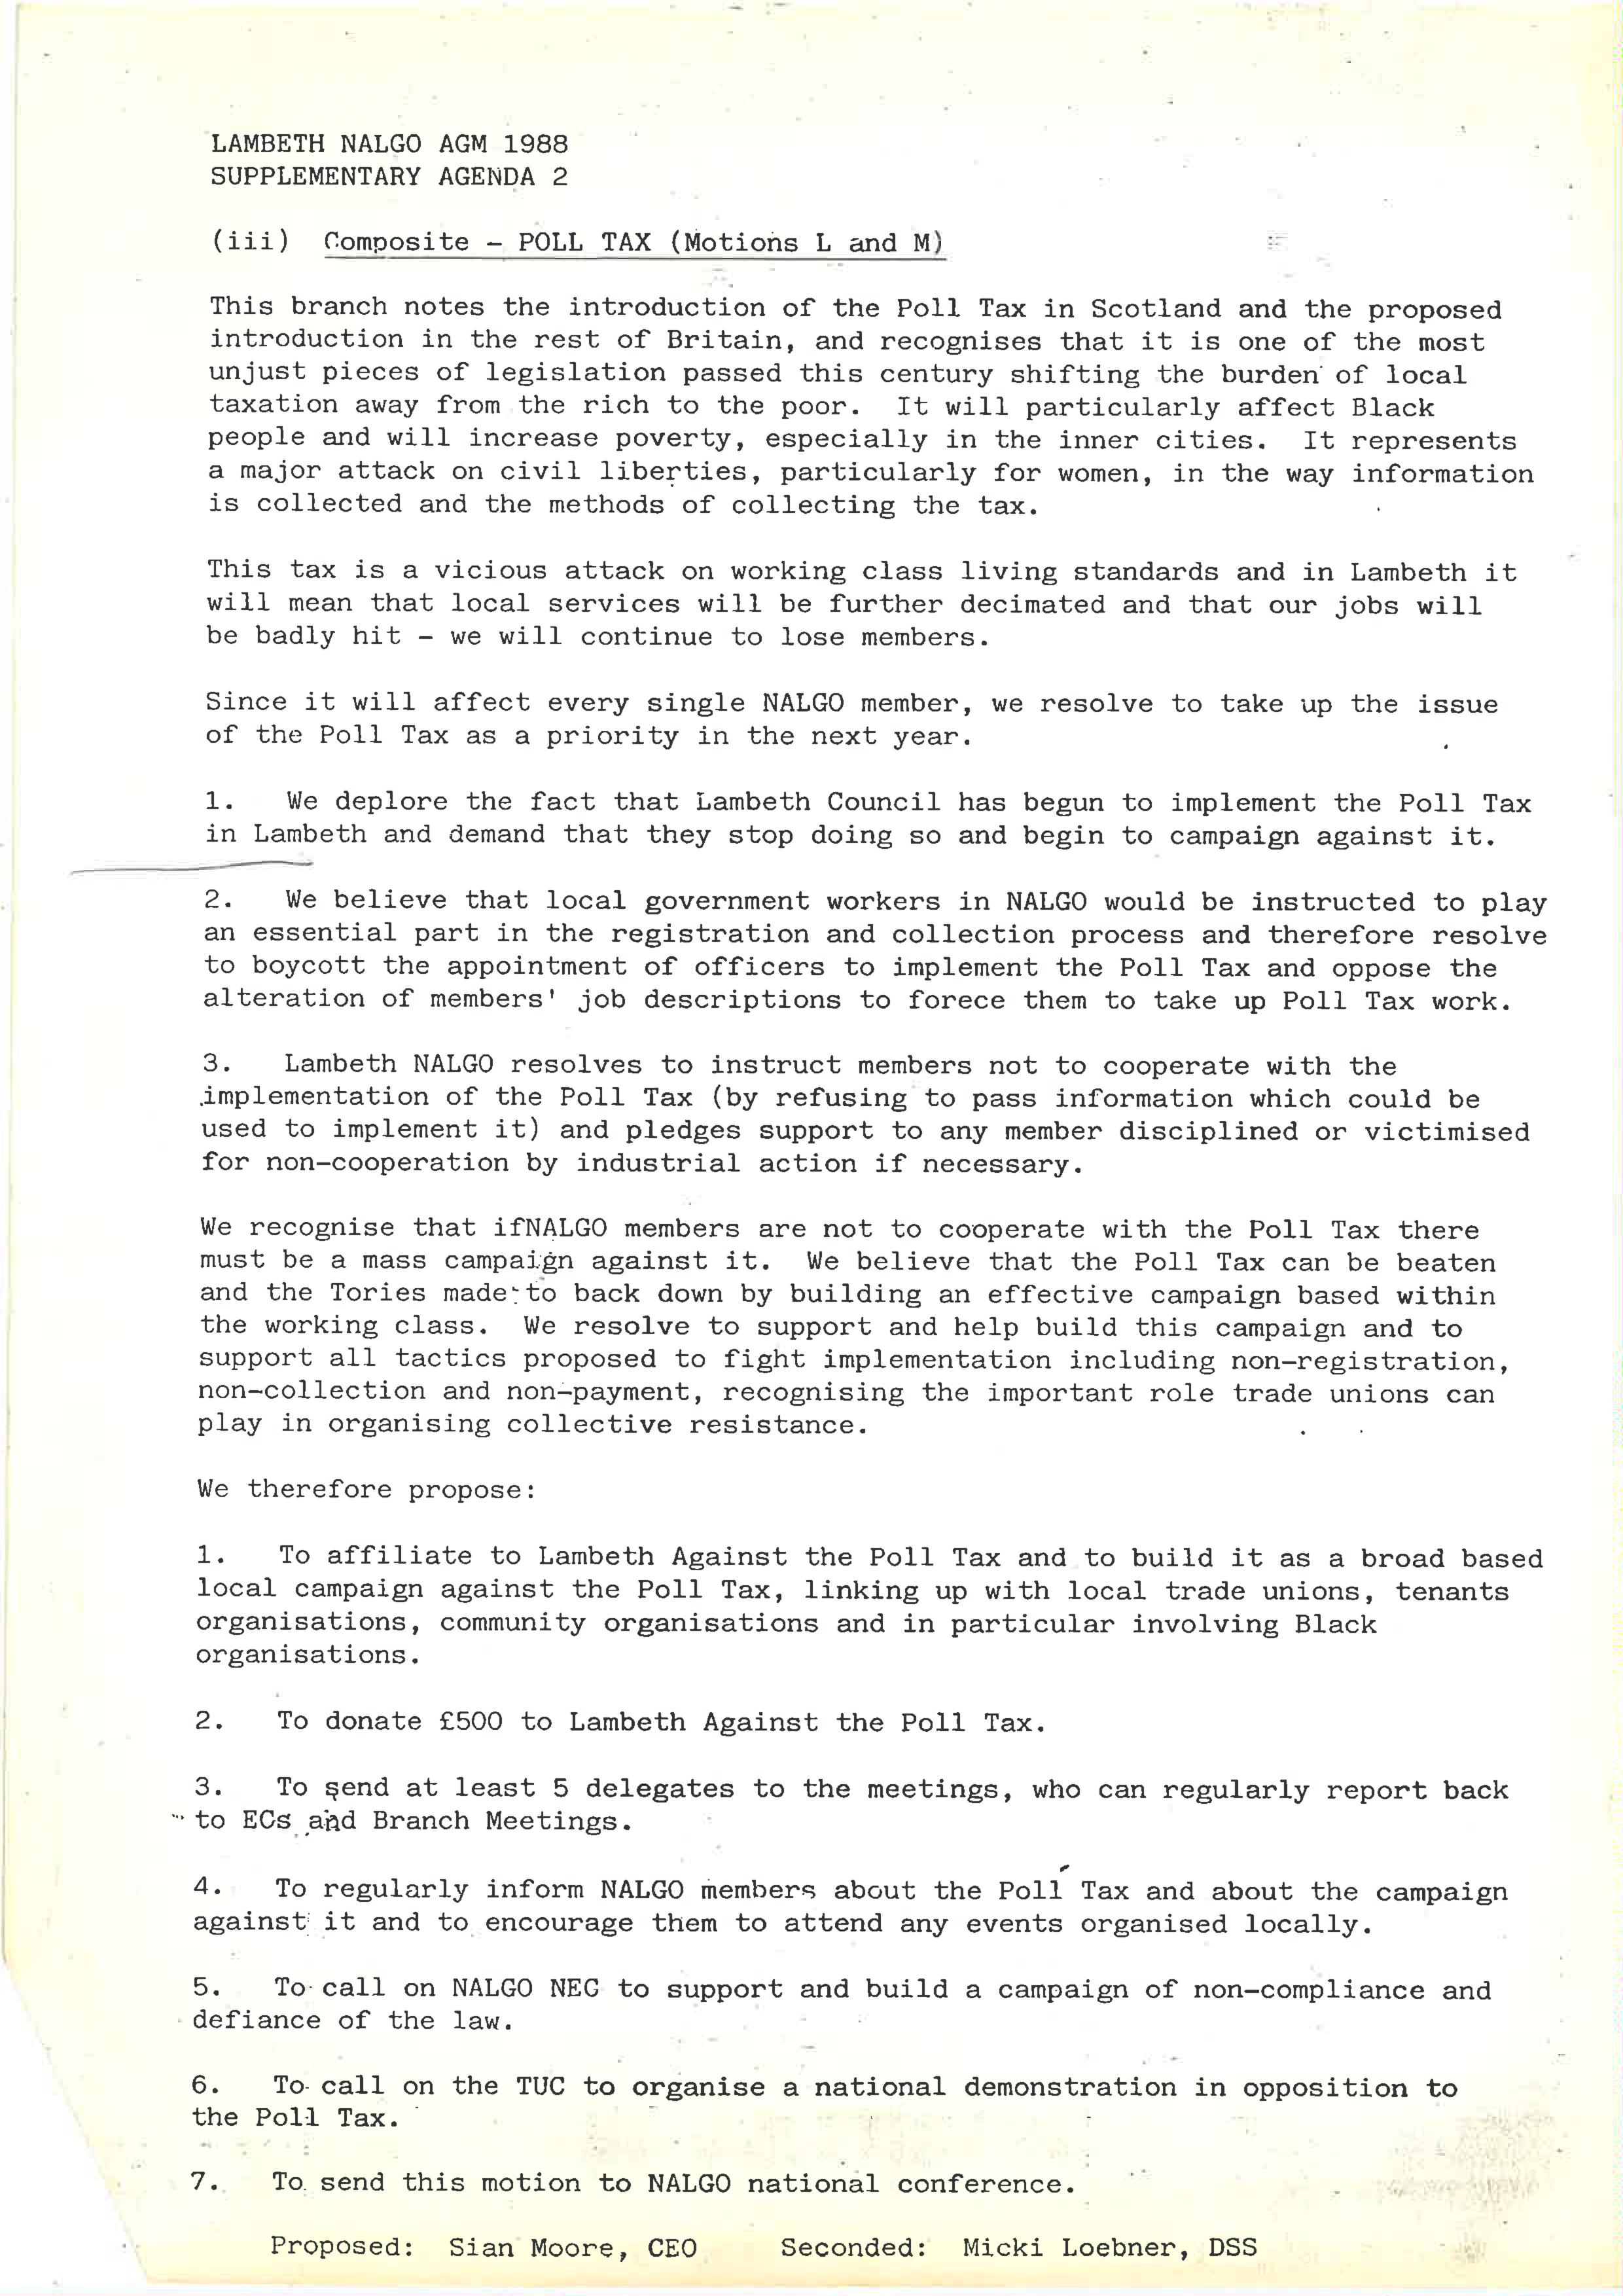 LAmbeth NALGO motion against Poll Tax 1988